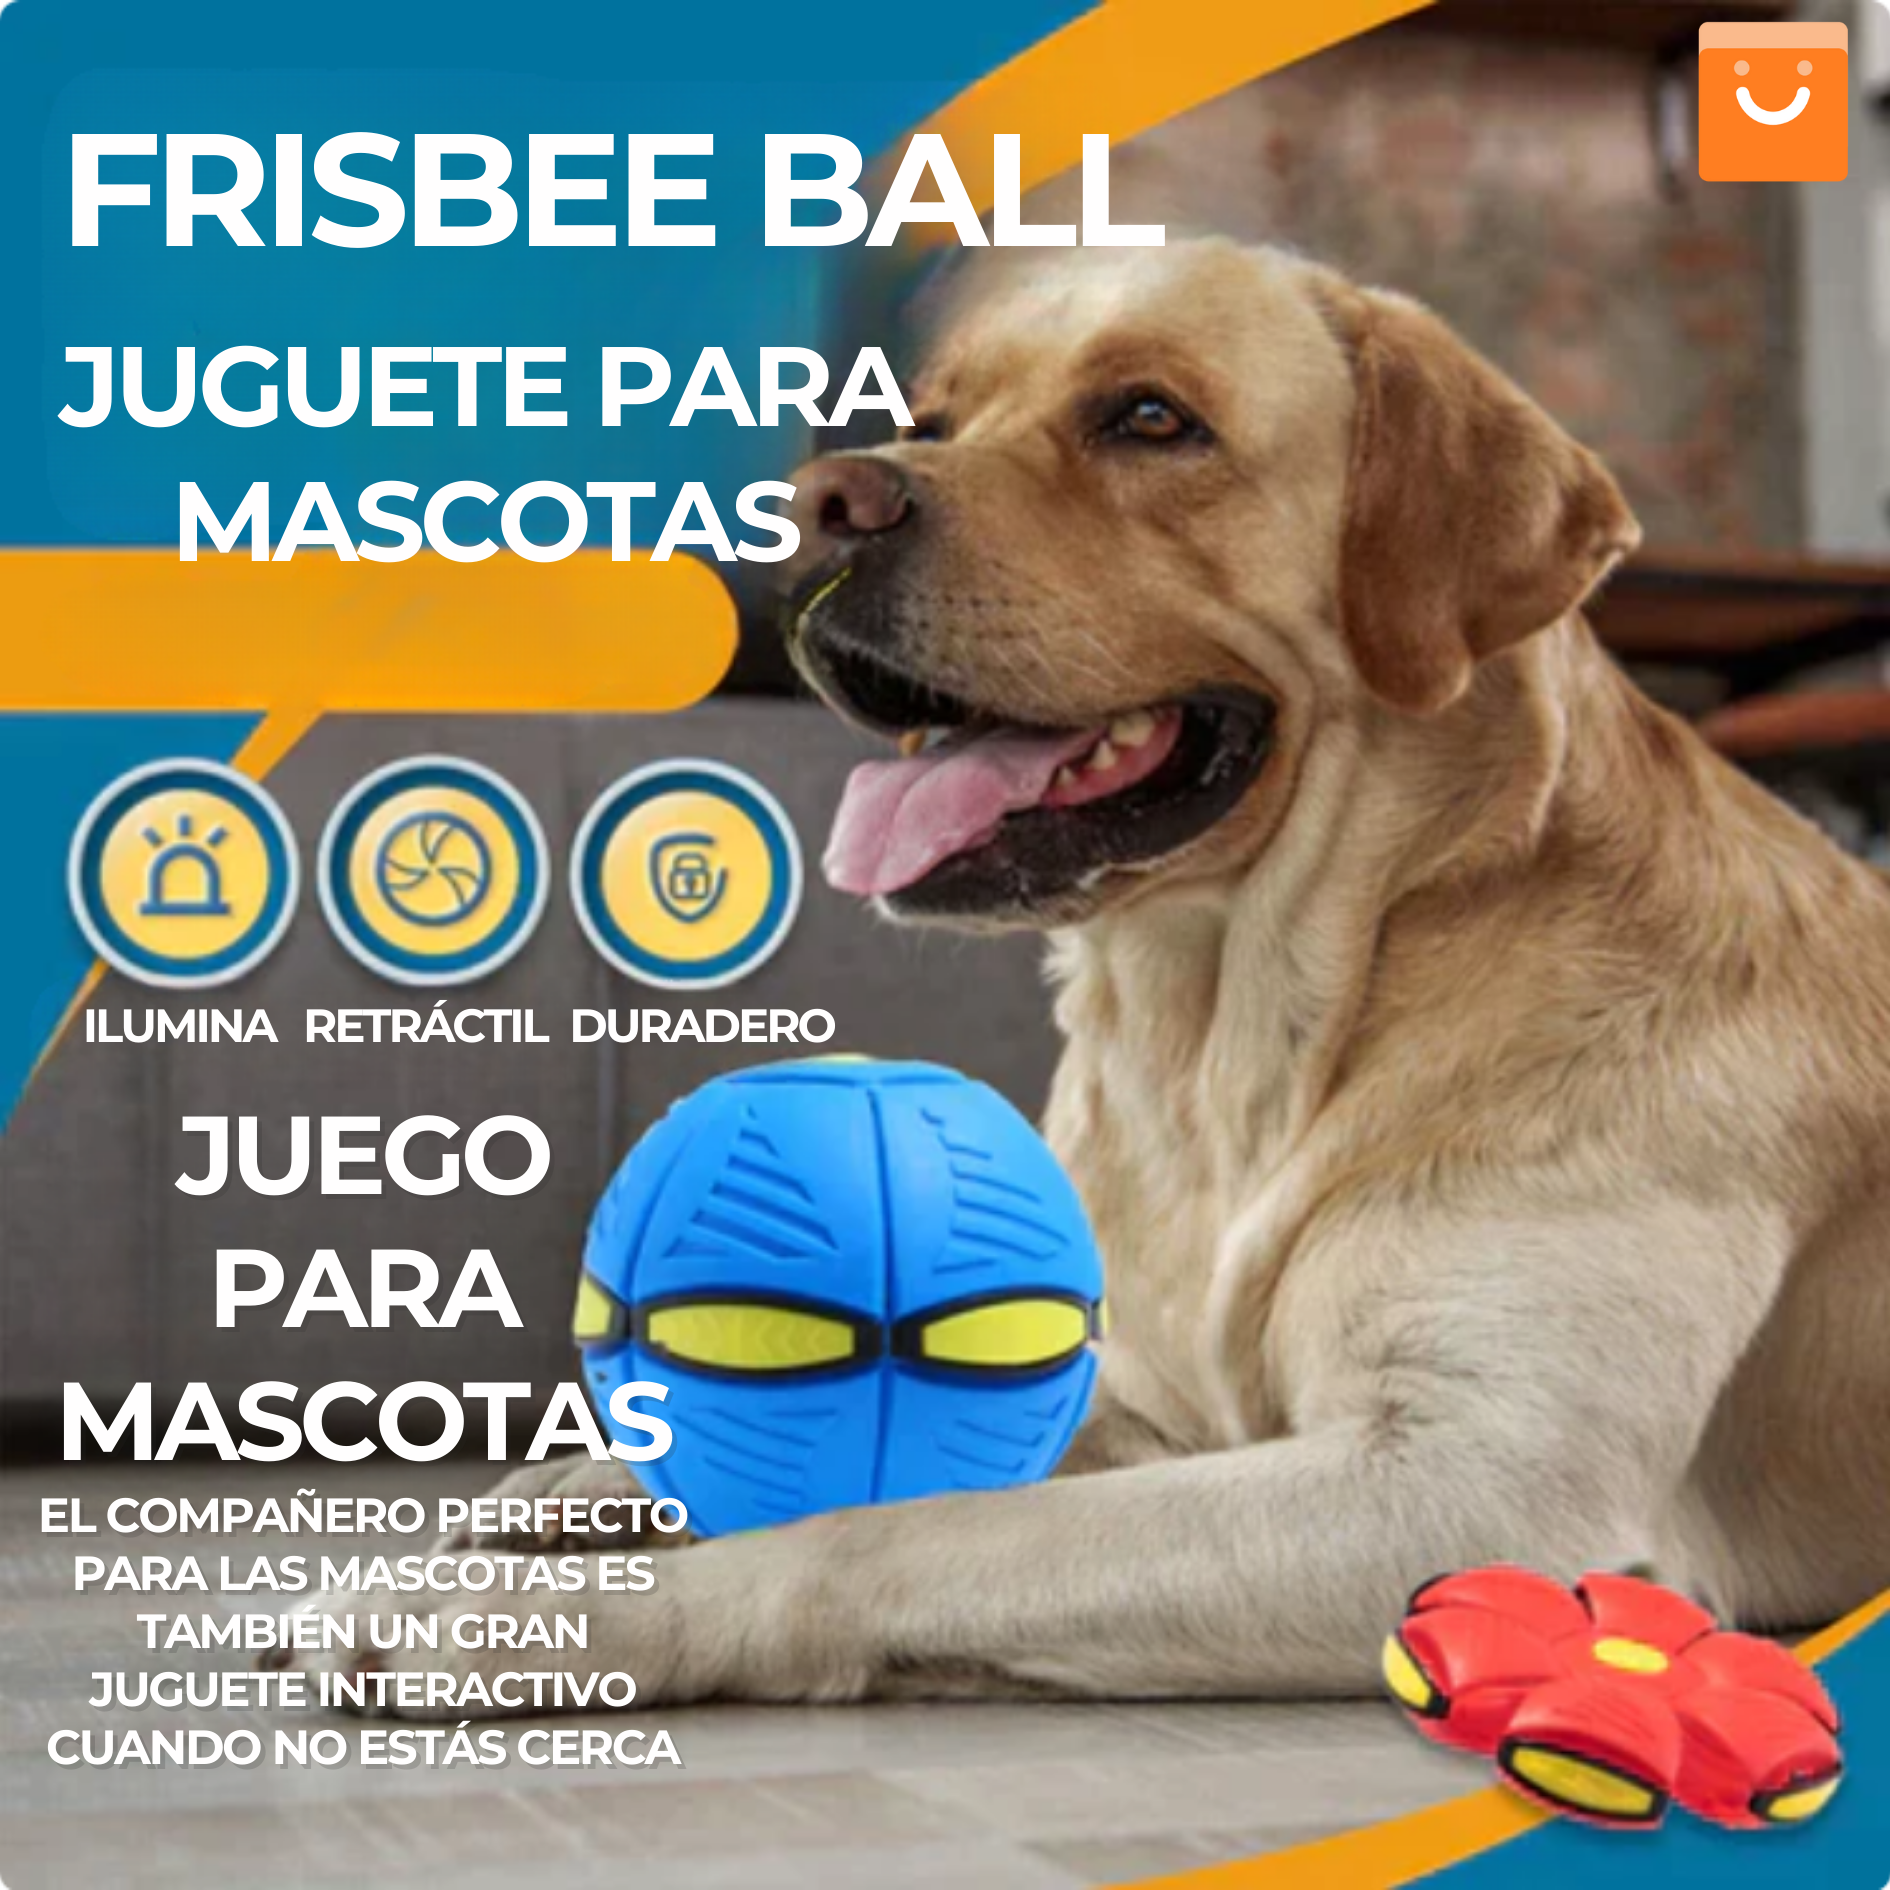 FrisbeeBall™ - juguete para mascotas, con muchas horas de diversión